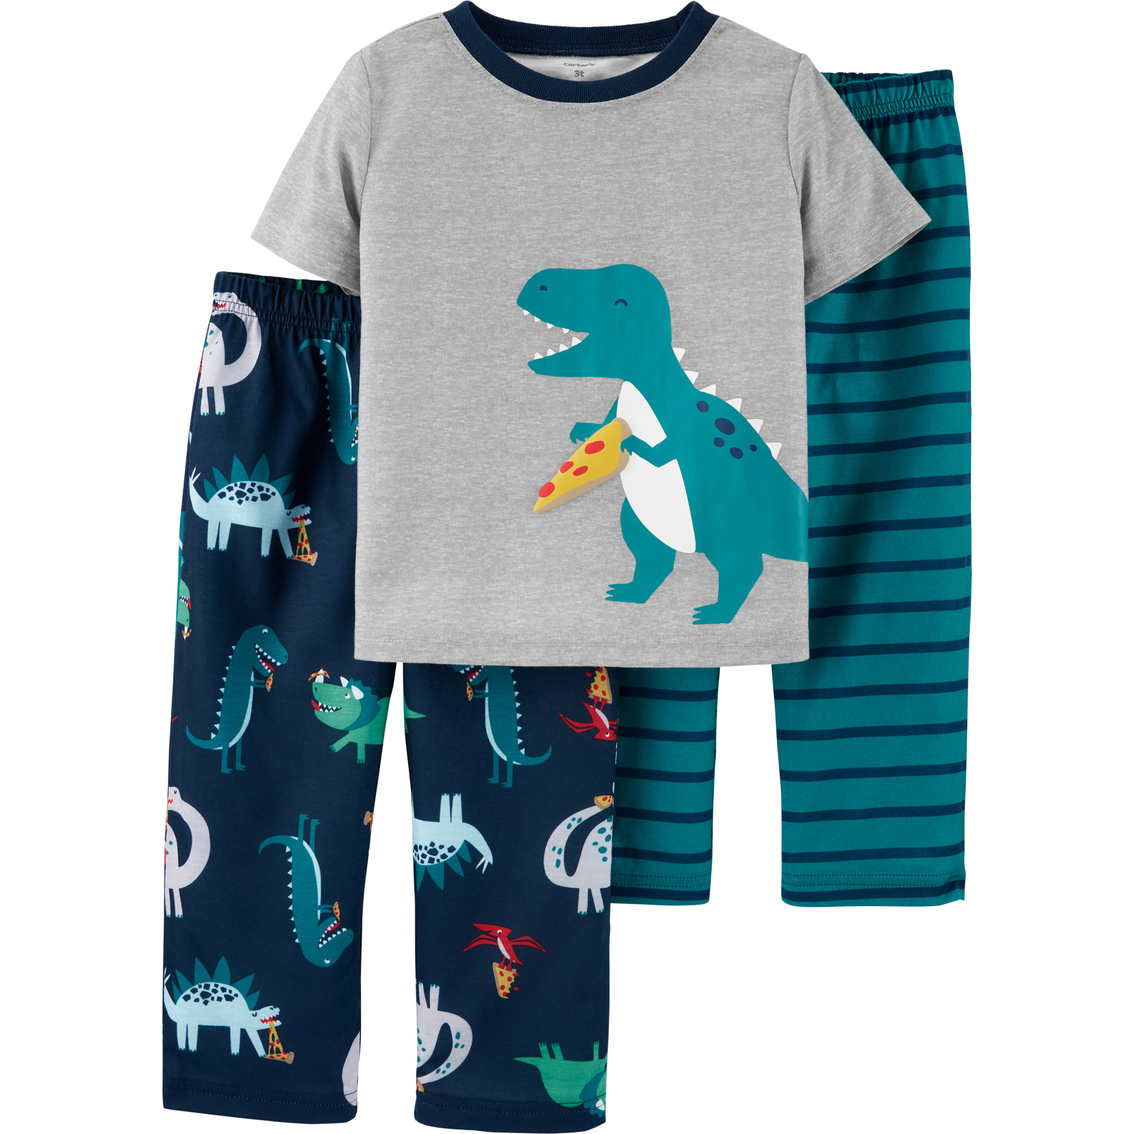 Carter's Toddler Boys T Rex 3 Pc. Pajama Set | Toddler Boys 2t-4t ...